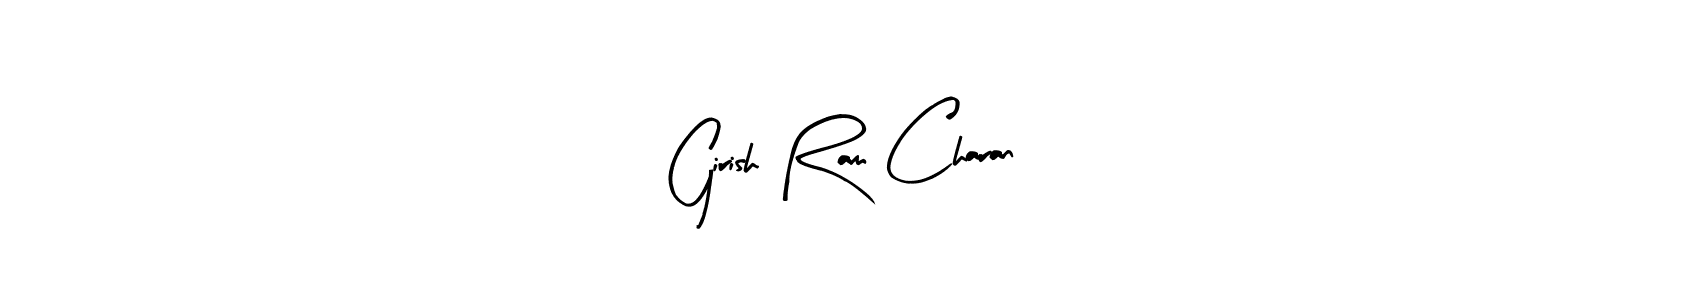 Make a beautiful signature design for name Girish Ram Charan. Use this online signature maker to create a handwritten signature for free. Girish Ram Charan signature style 8 images and pictures png